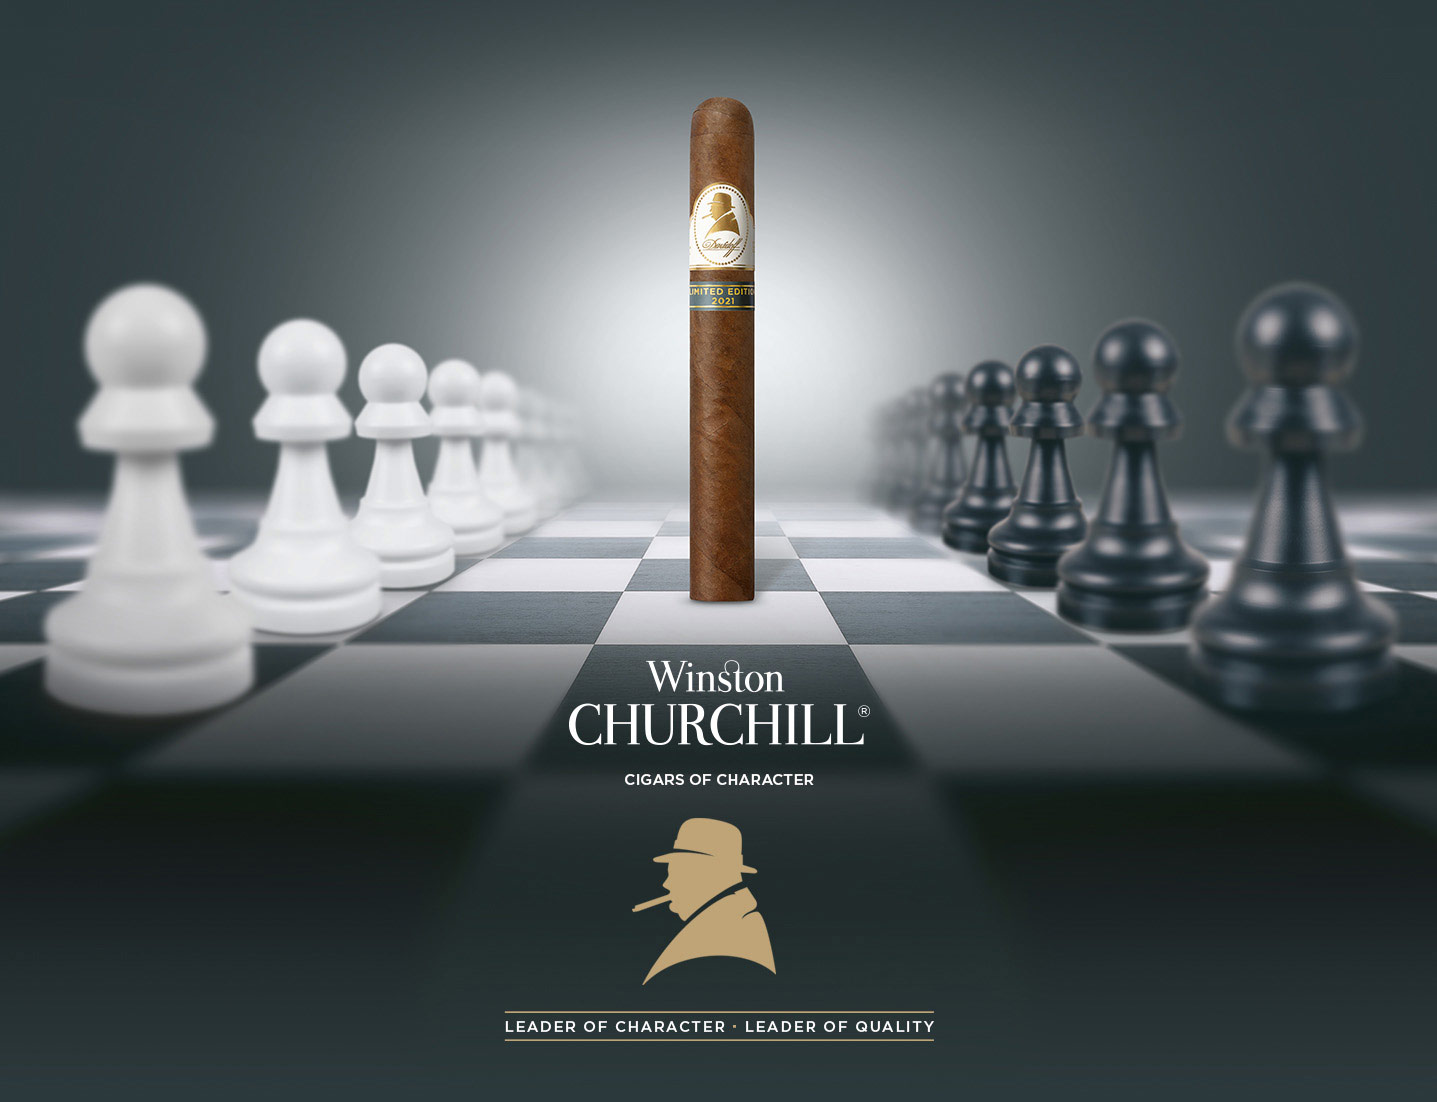 The Davidoff Winston Churchill Cigar 2021 Limited Edition